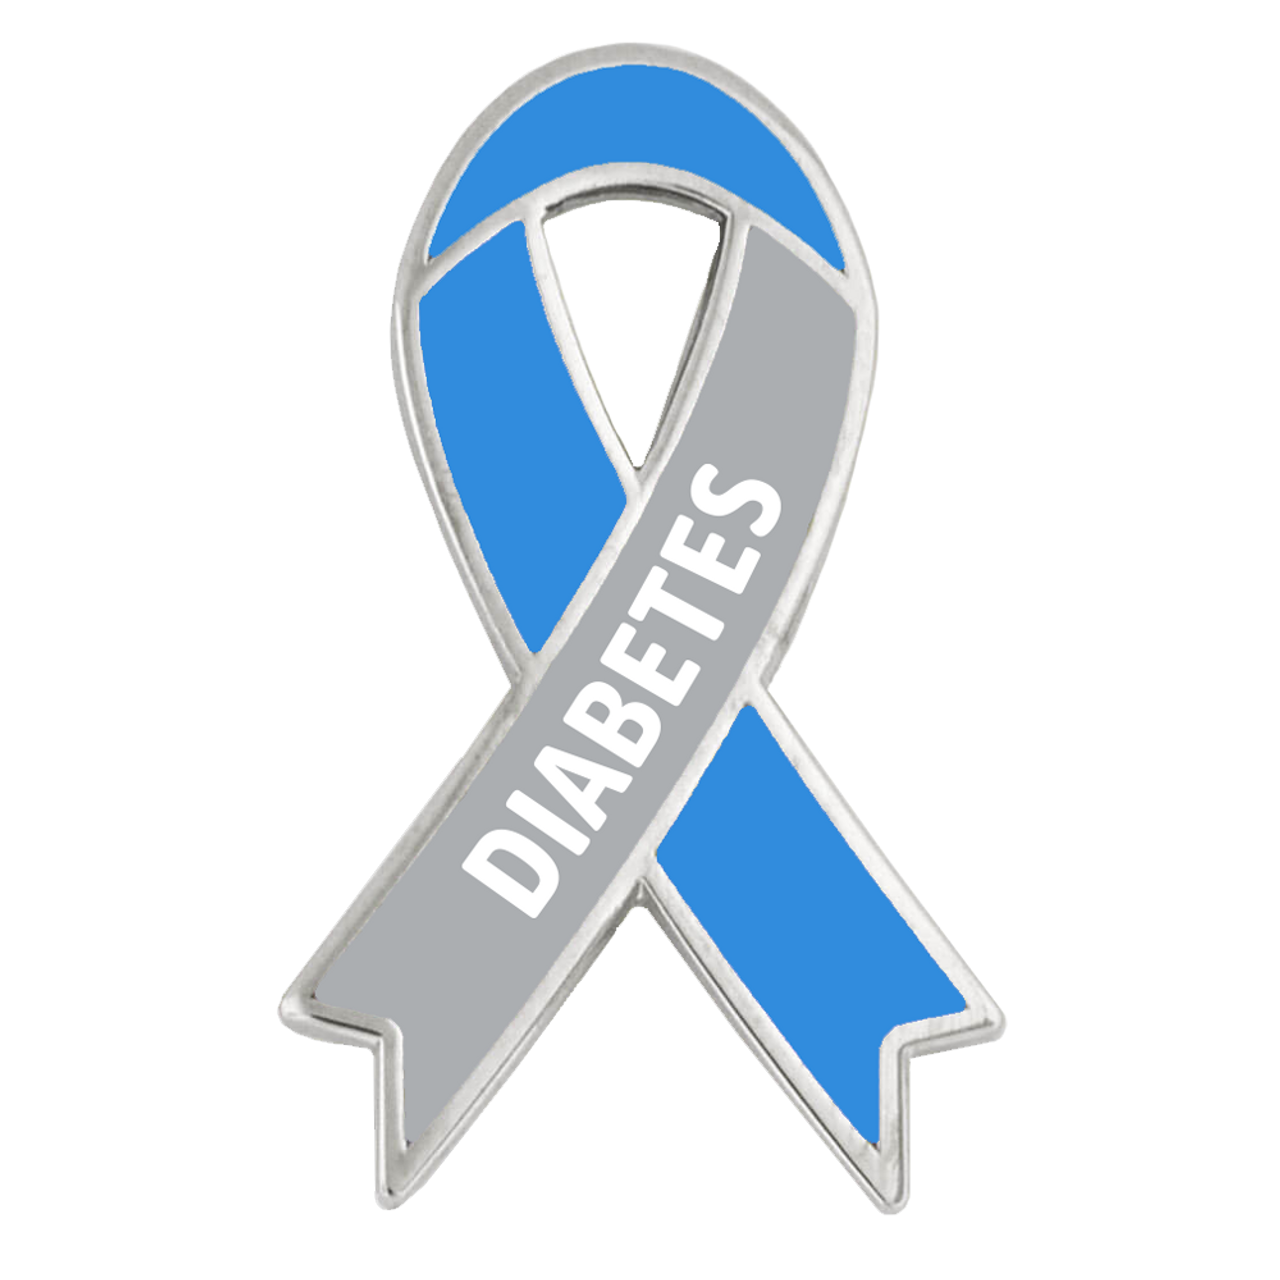 Walking Light Blue Ribbon Pin | Light Blue | Diabetes Awareness Pins by PinMart